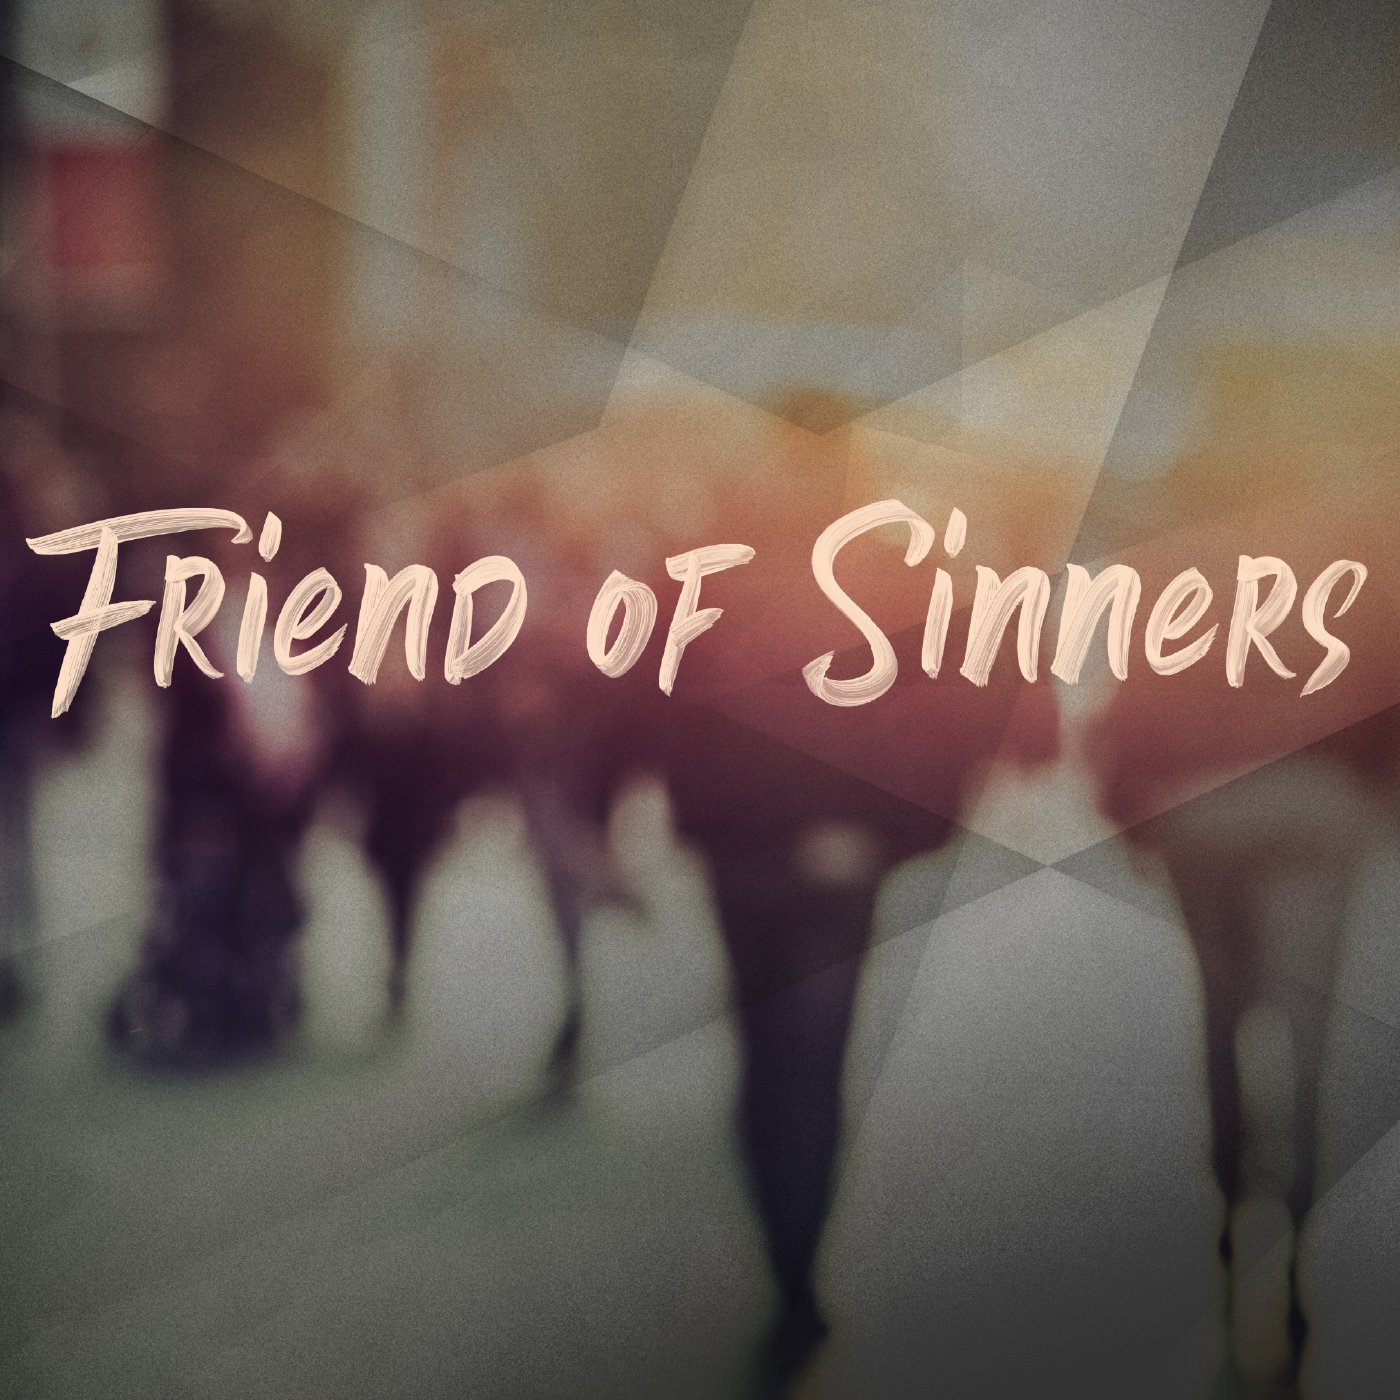 Friend of Sinners, Part 8